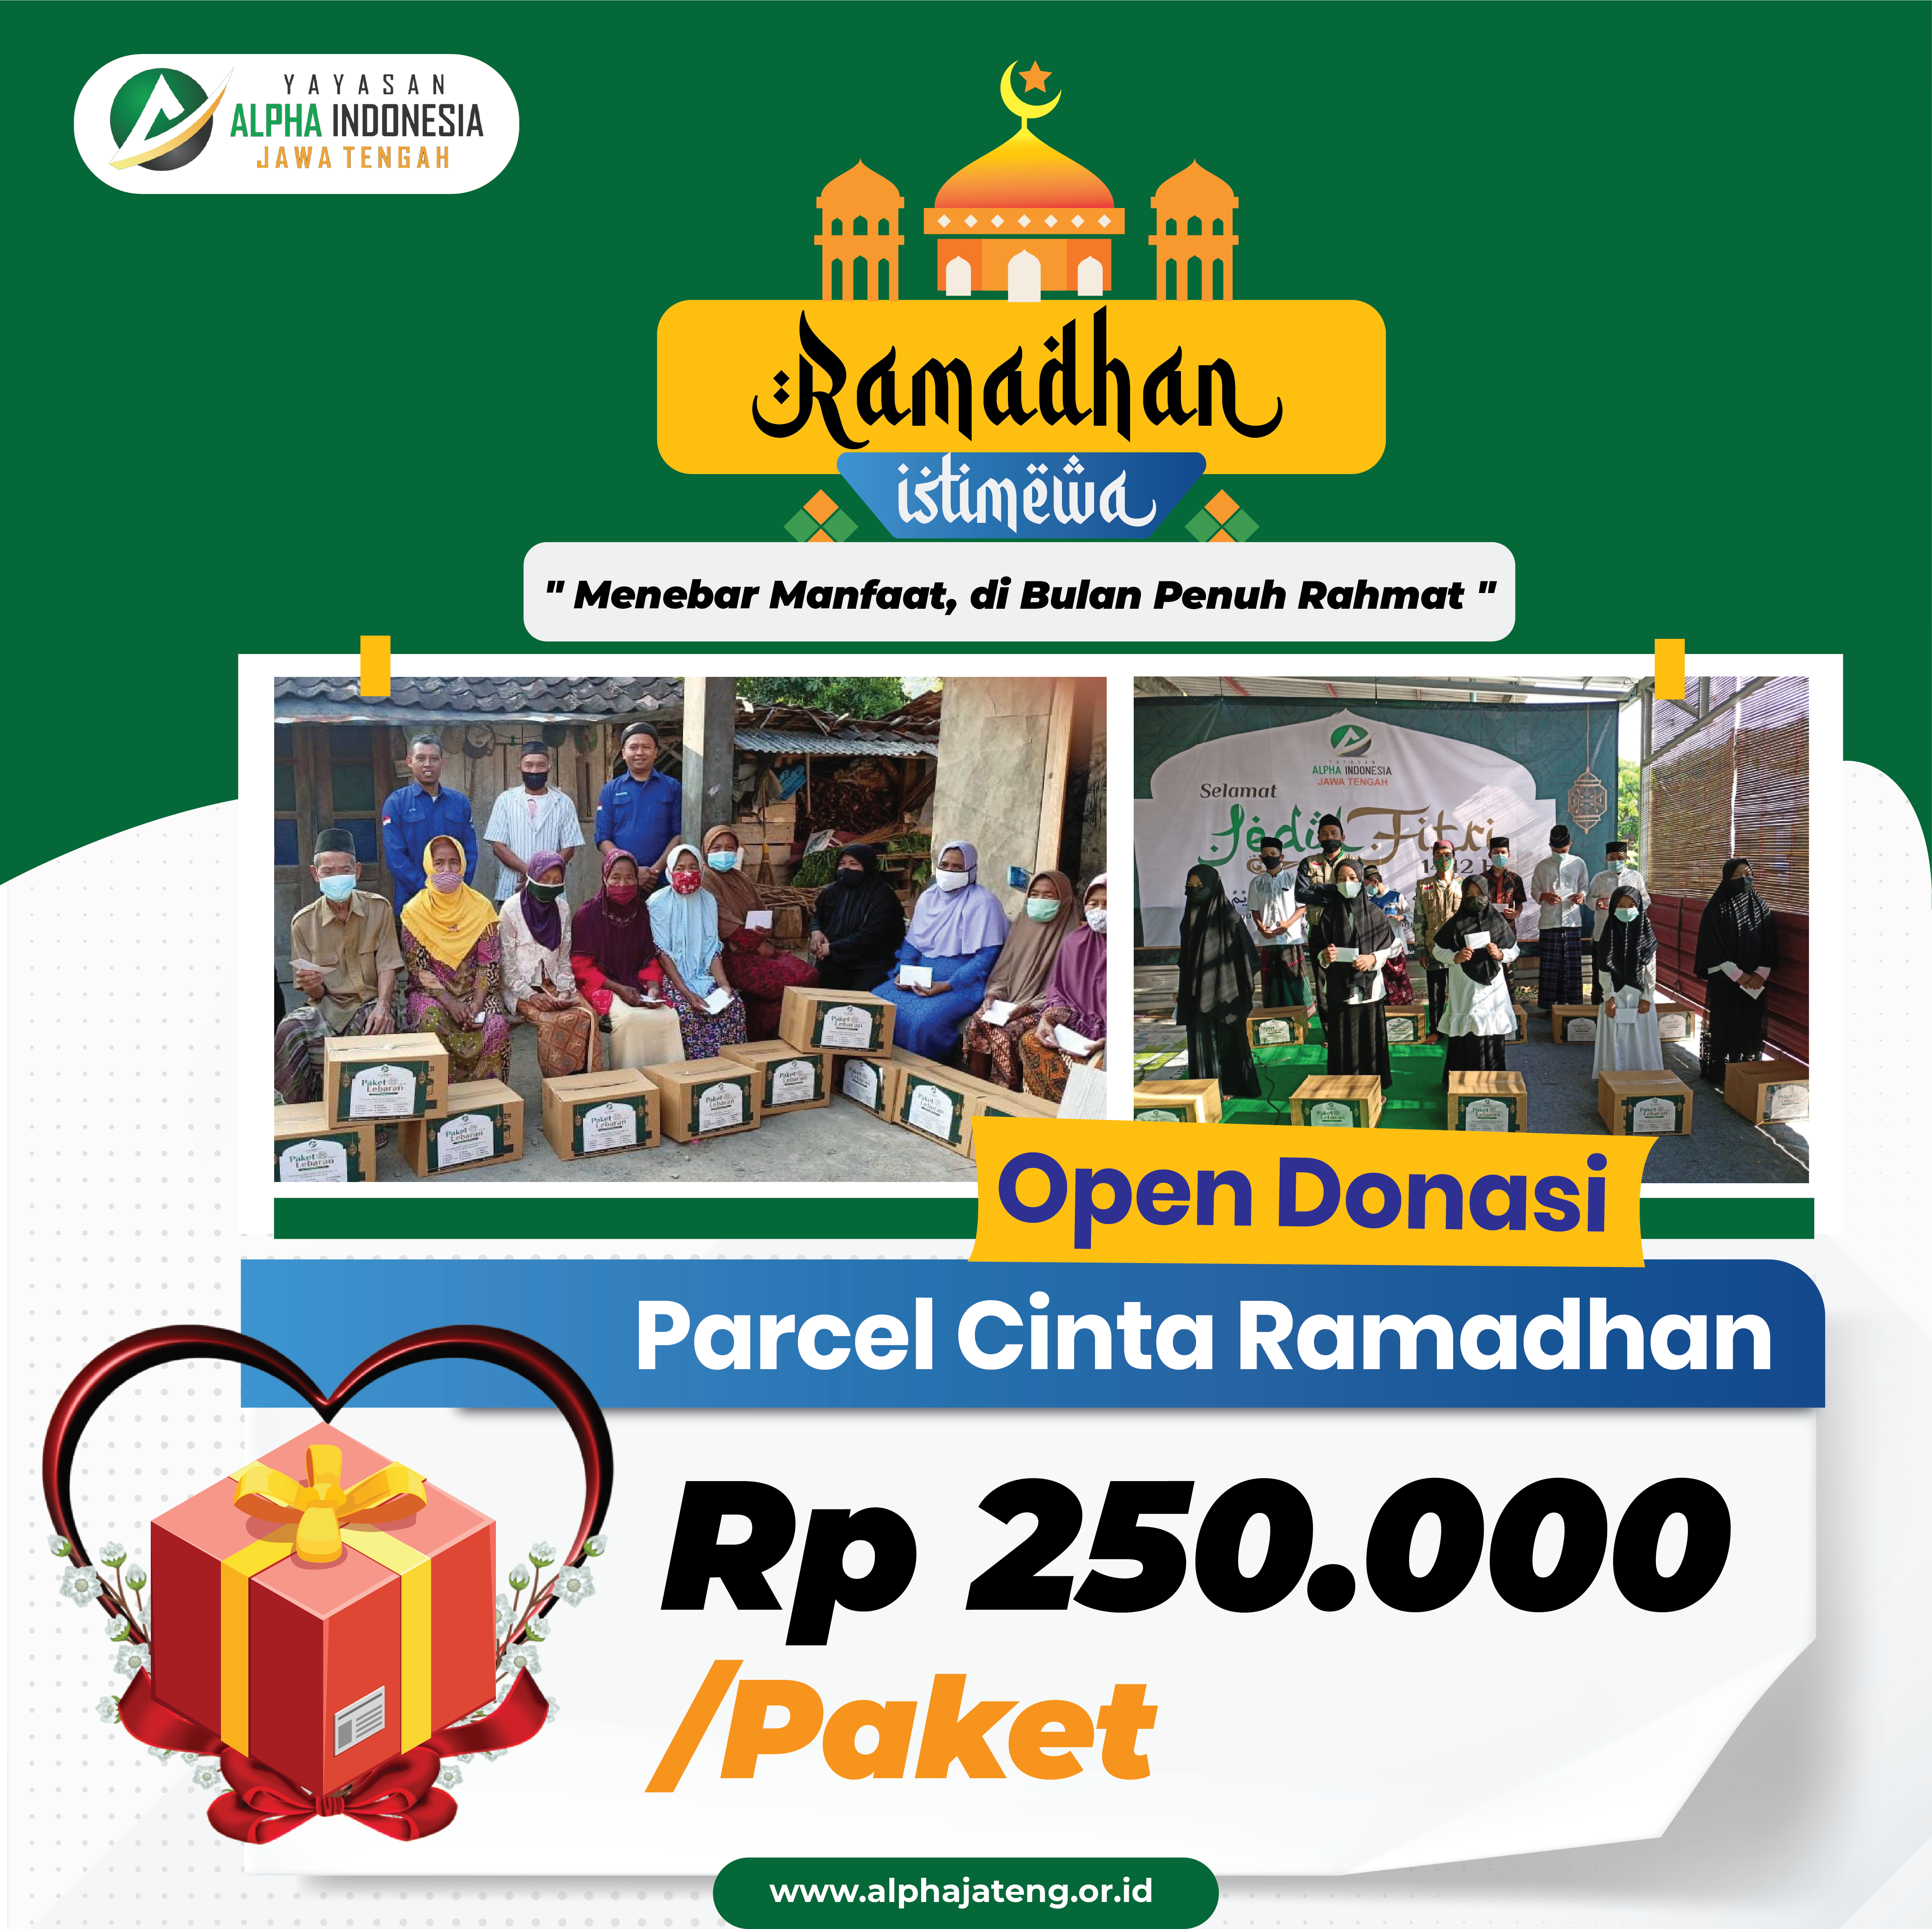 RAMADHAN ISTIMEWA ” Open Donasi Parcel Cinta Ramadhan “